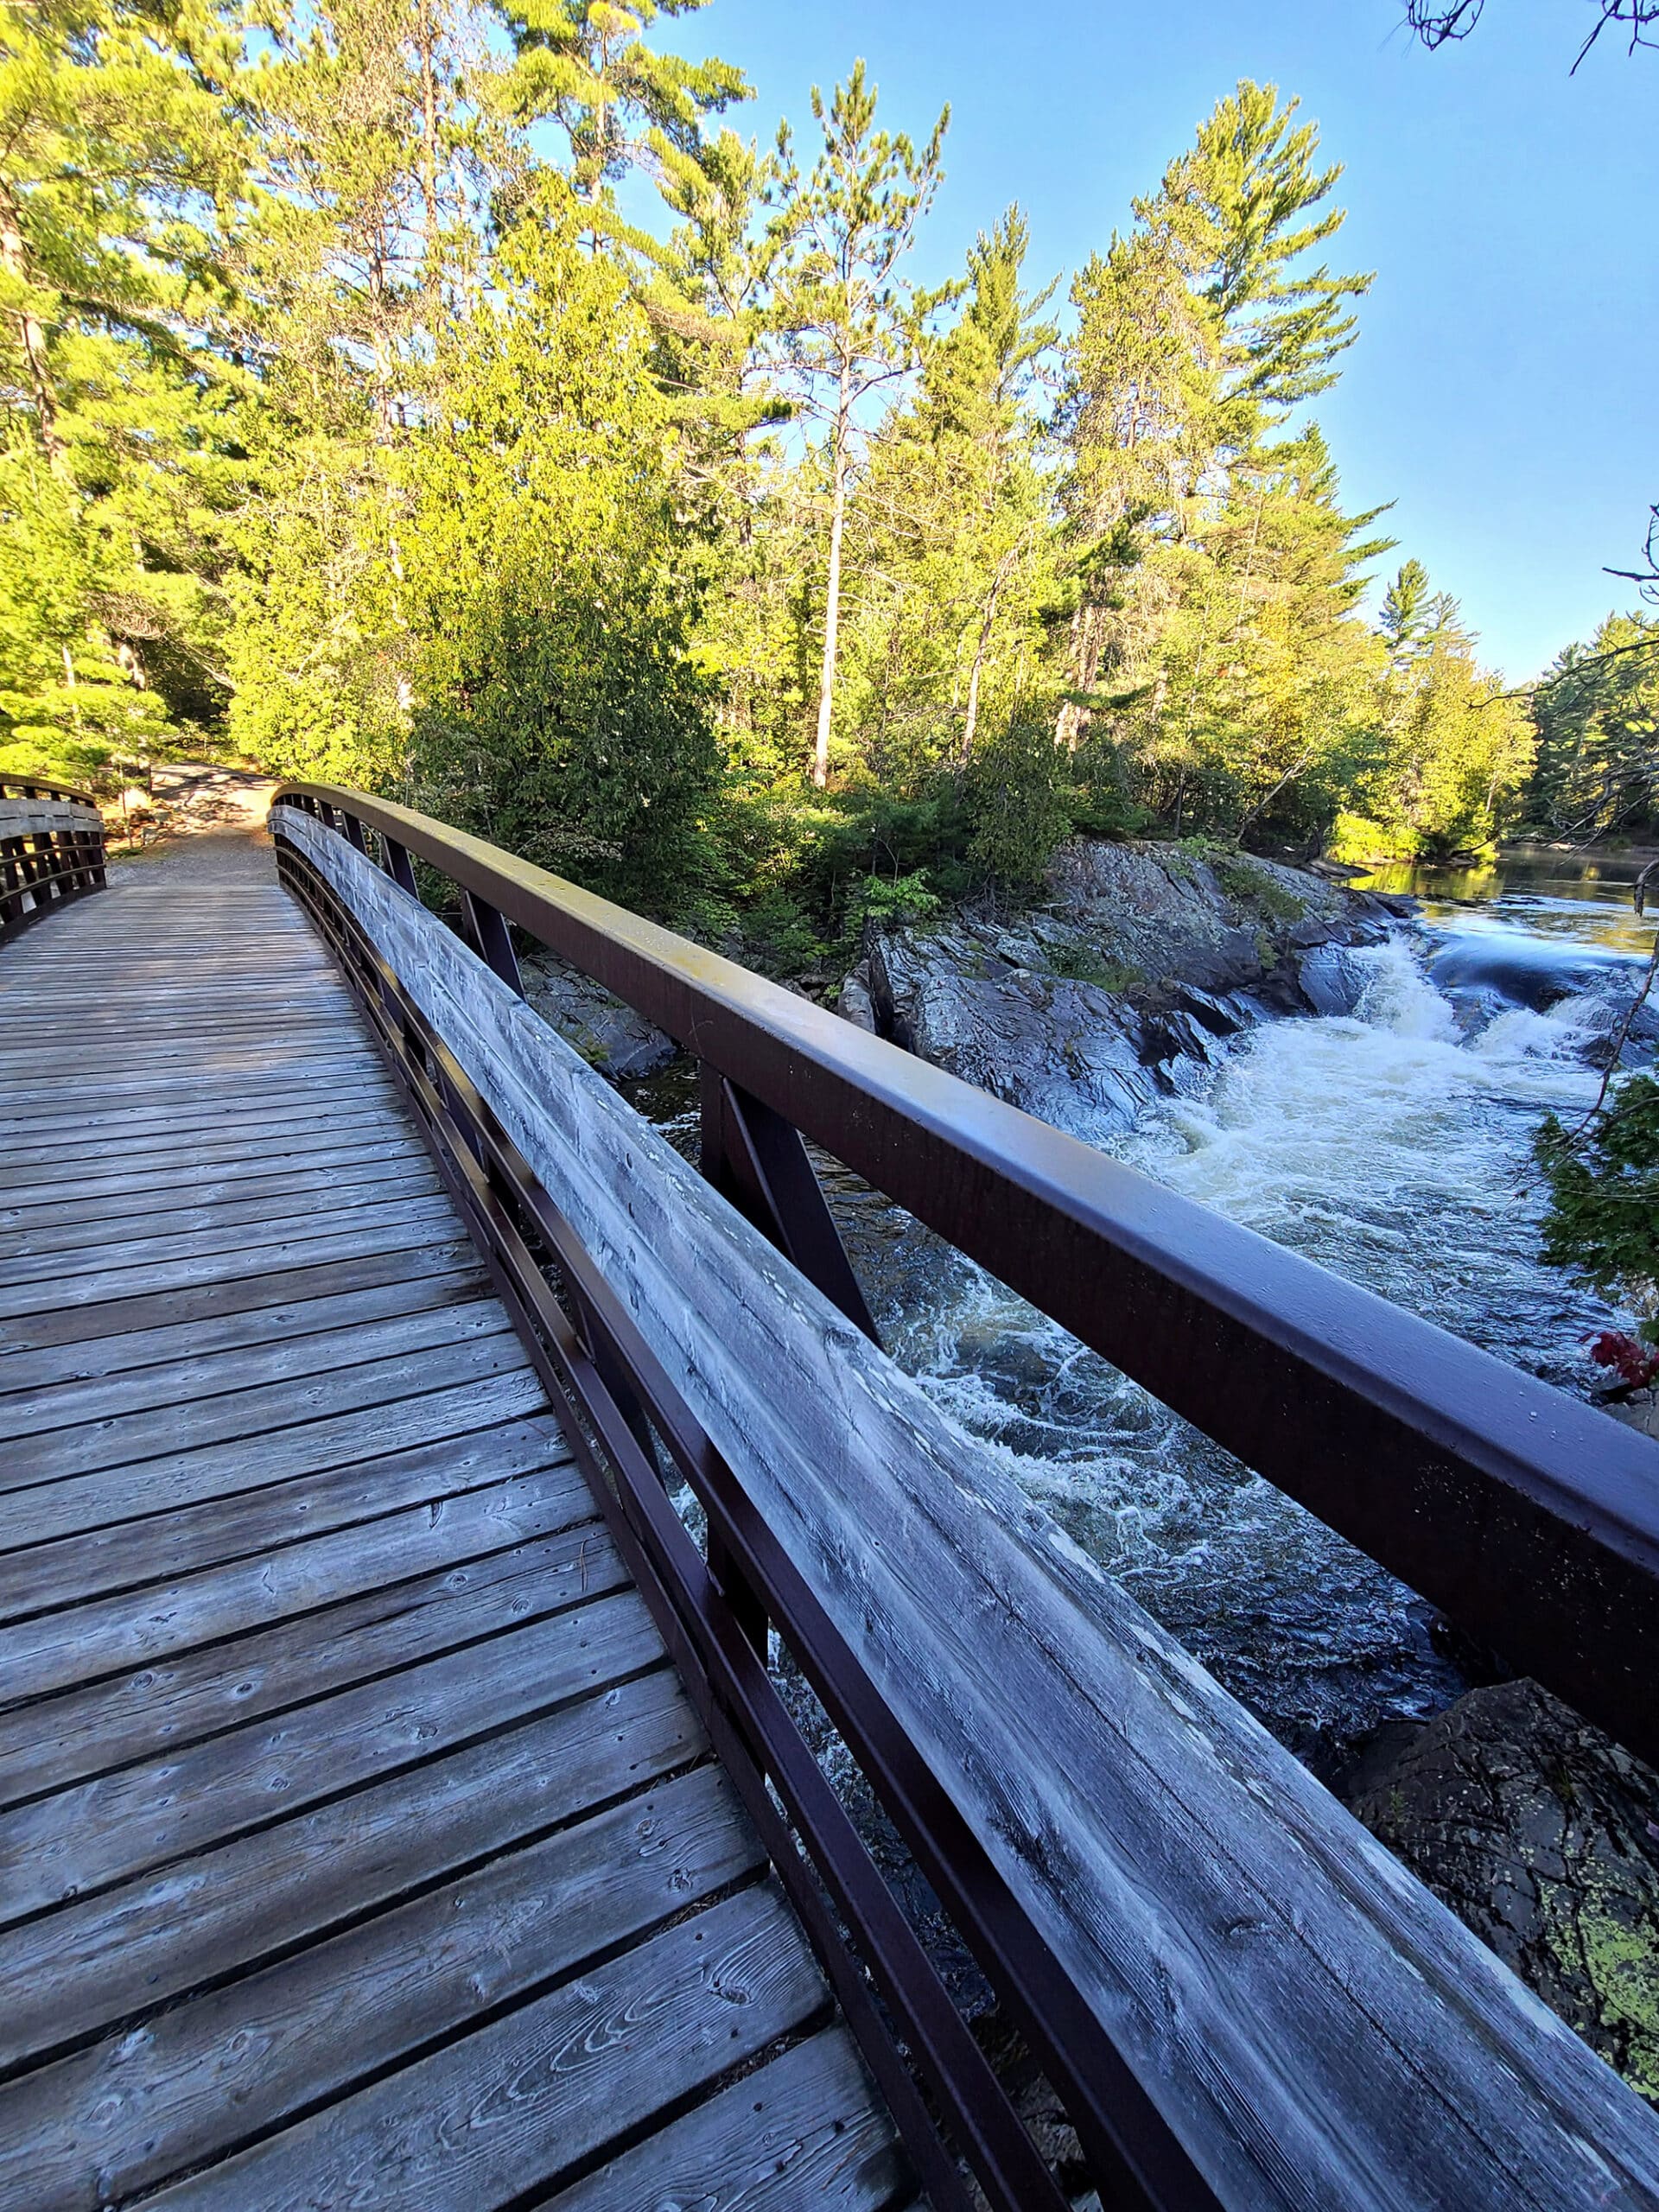 A wooden bridge crossing rapids.